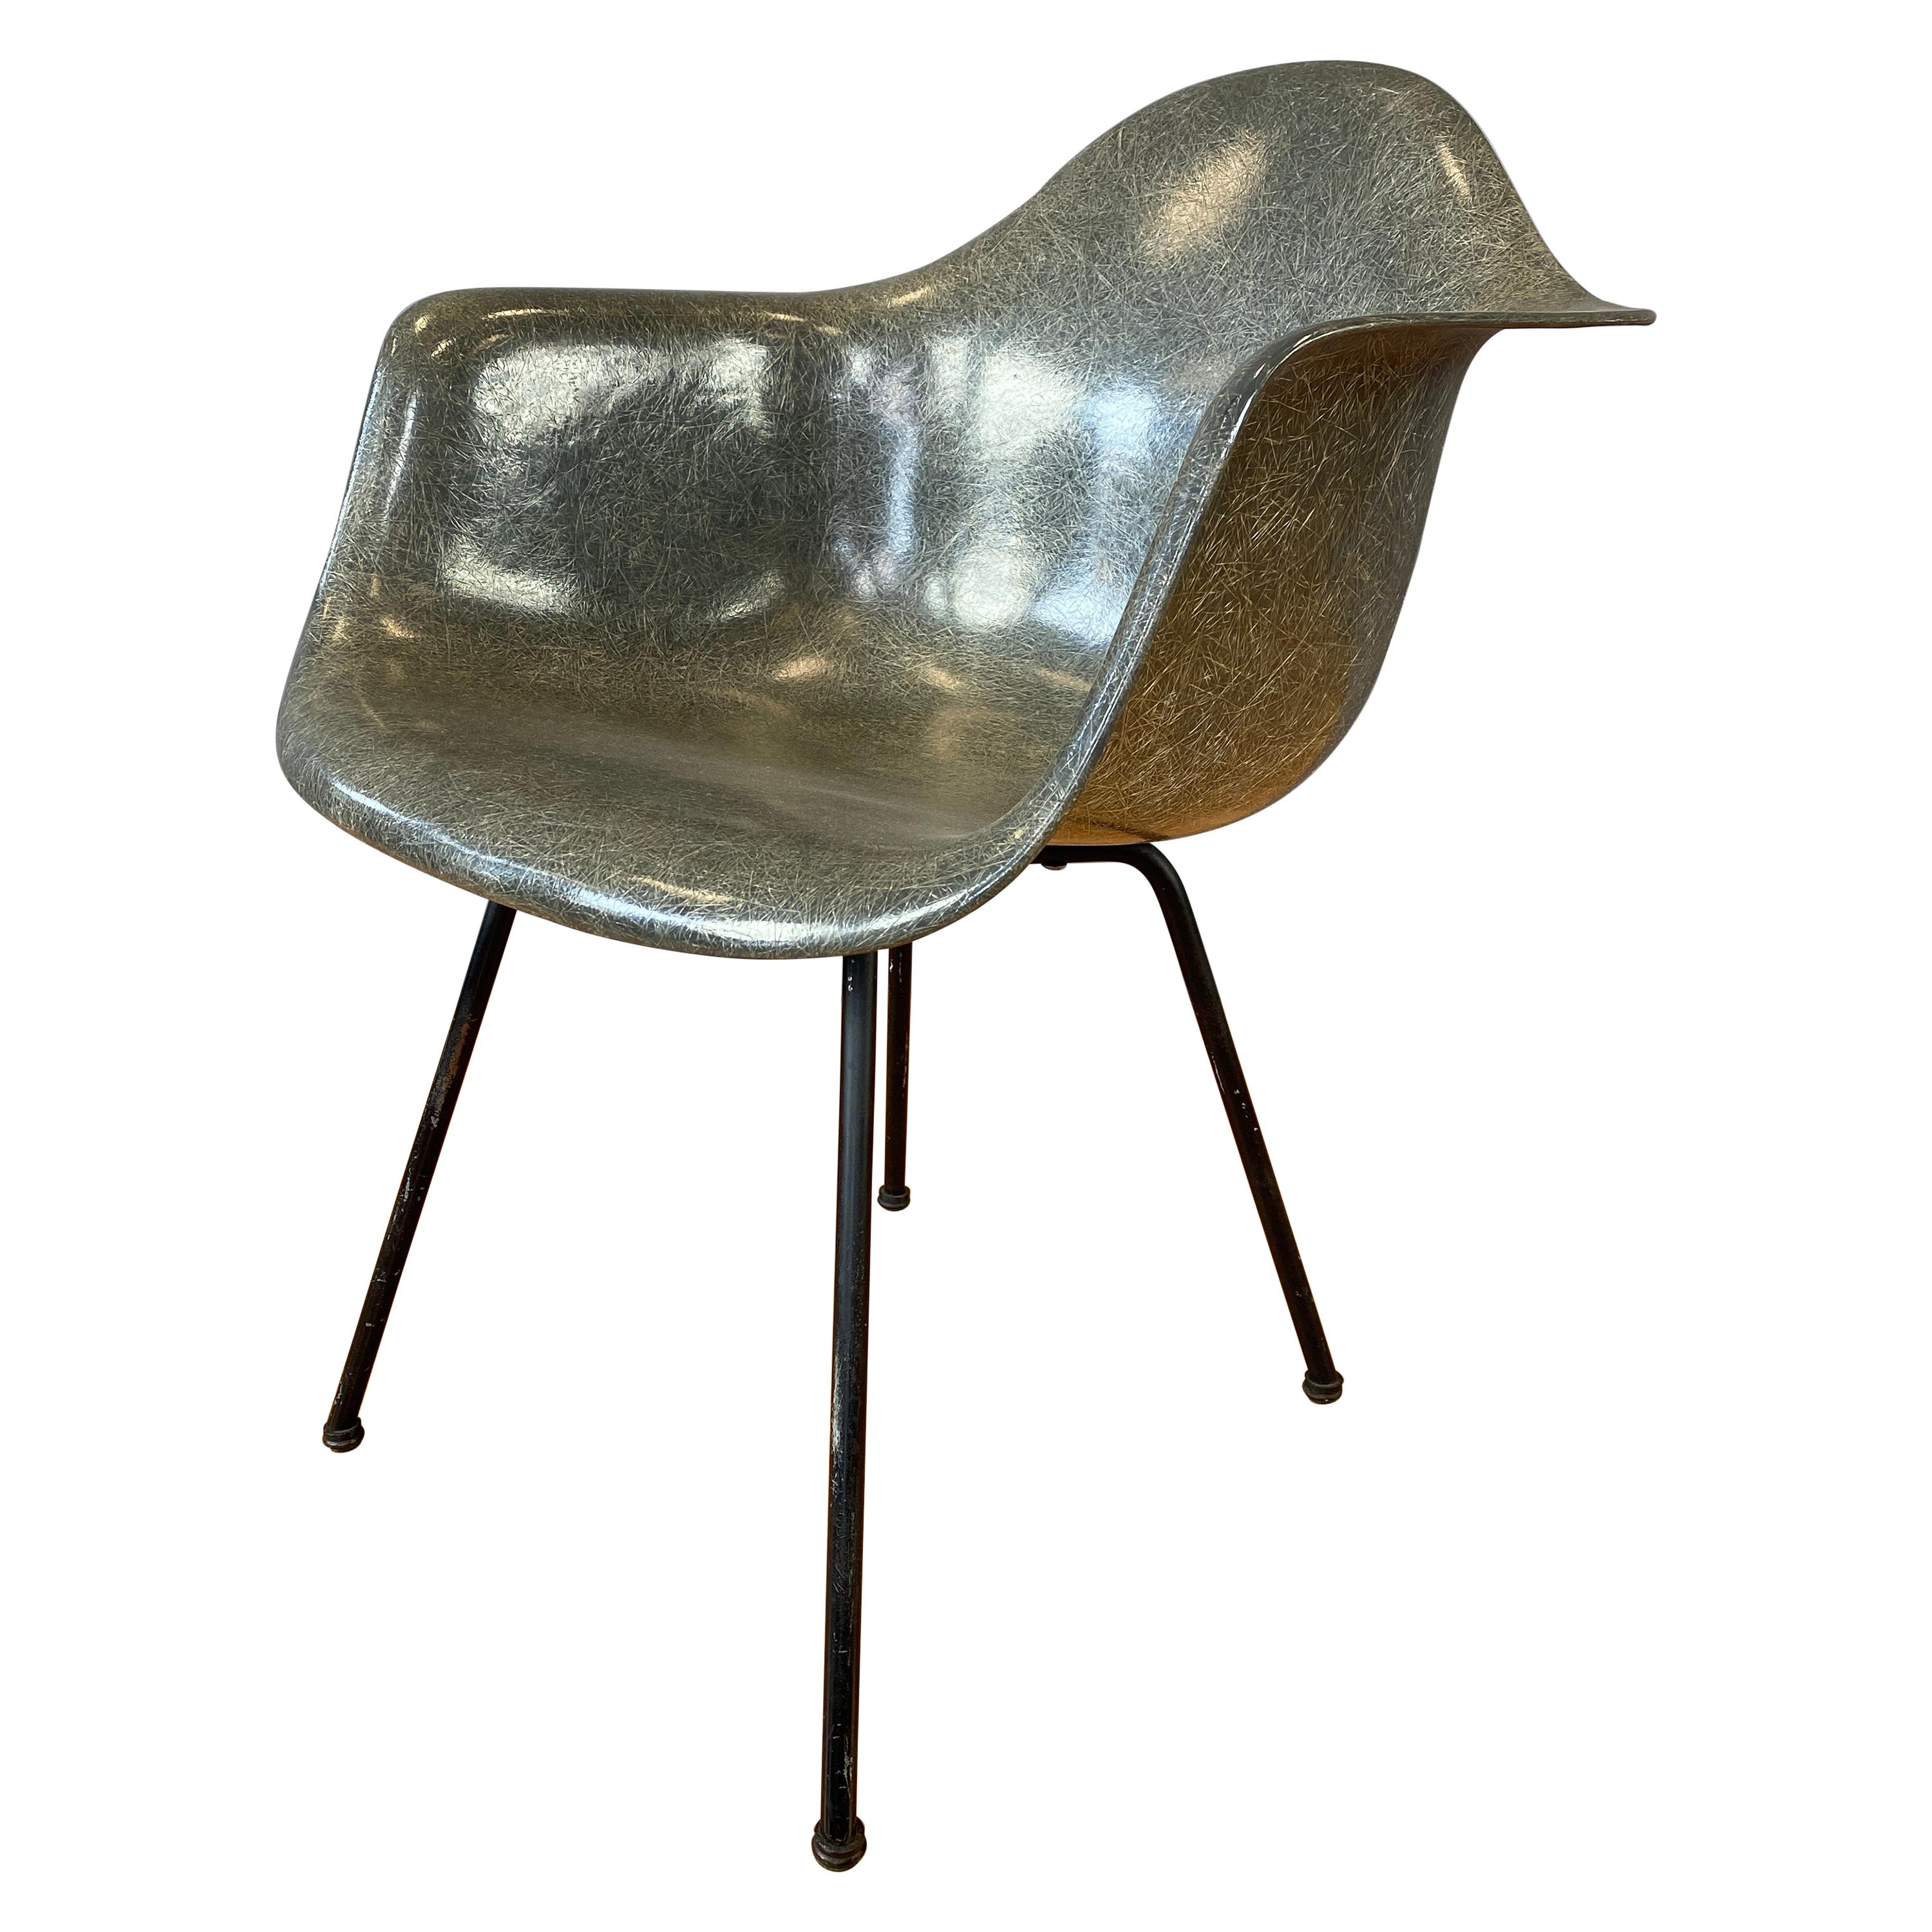 1st Generation Zenith Plastic Rope Edge Chair, Charles Eames for Herman Miller B